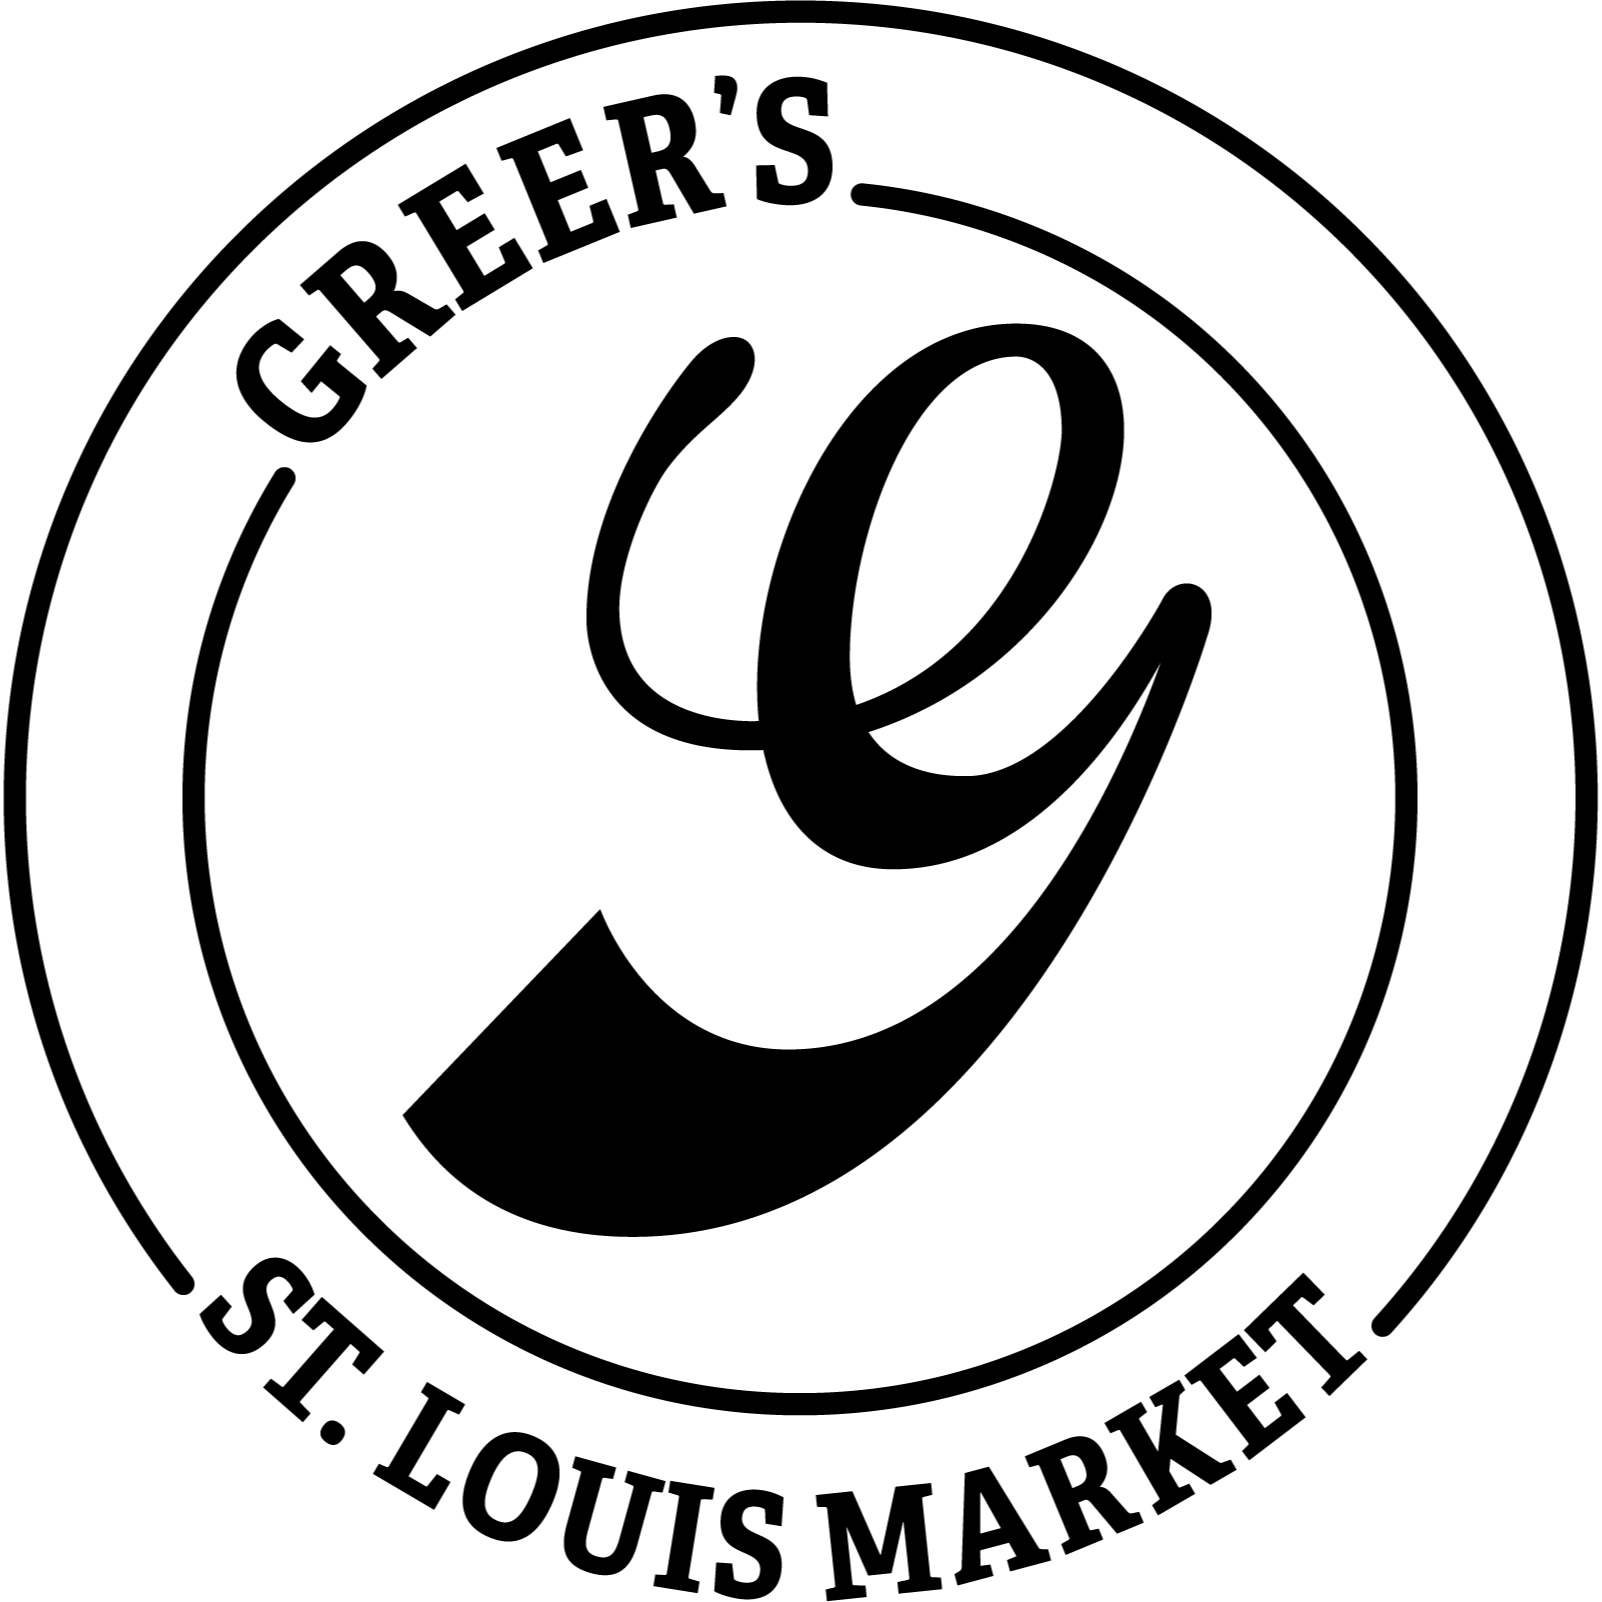 Greer's St. Louis Market